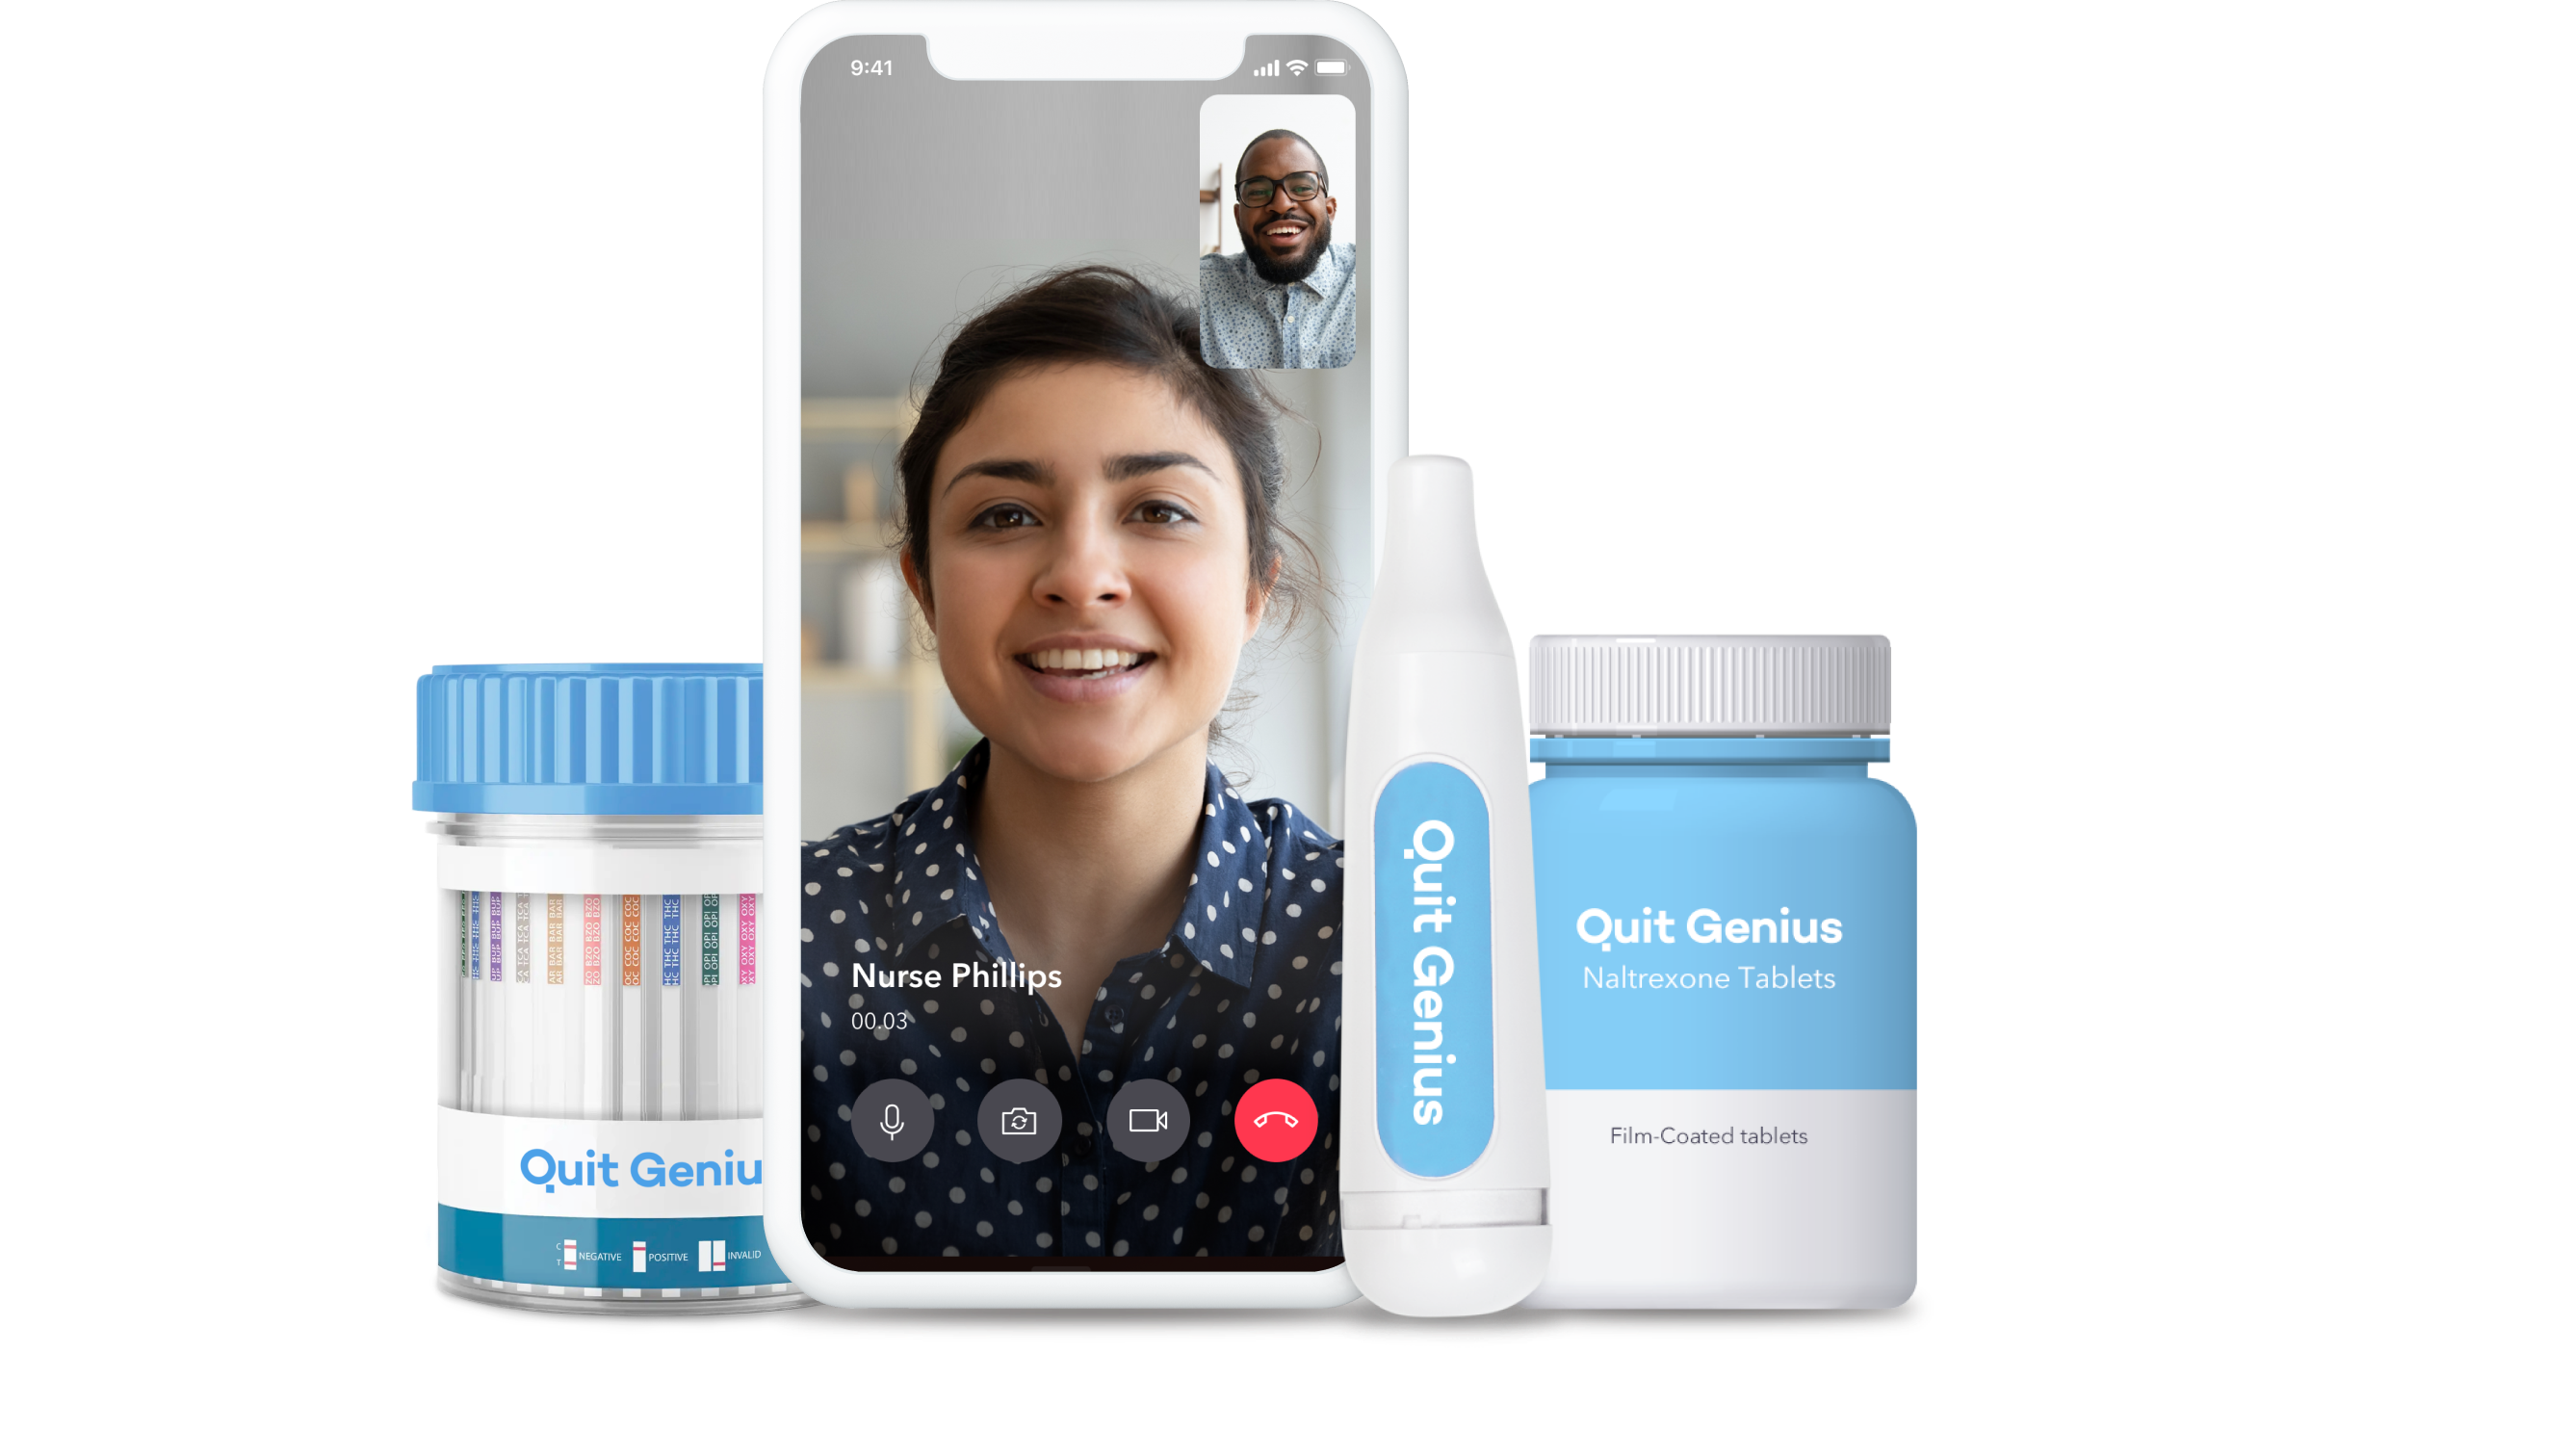 smartphone with Quit Genius products